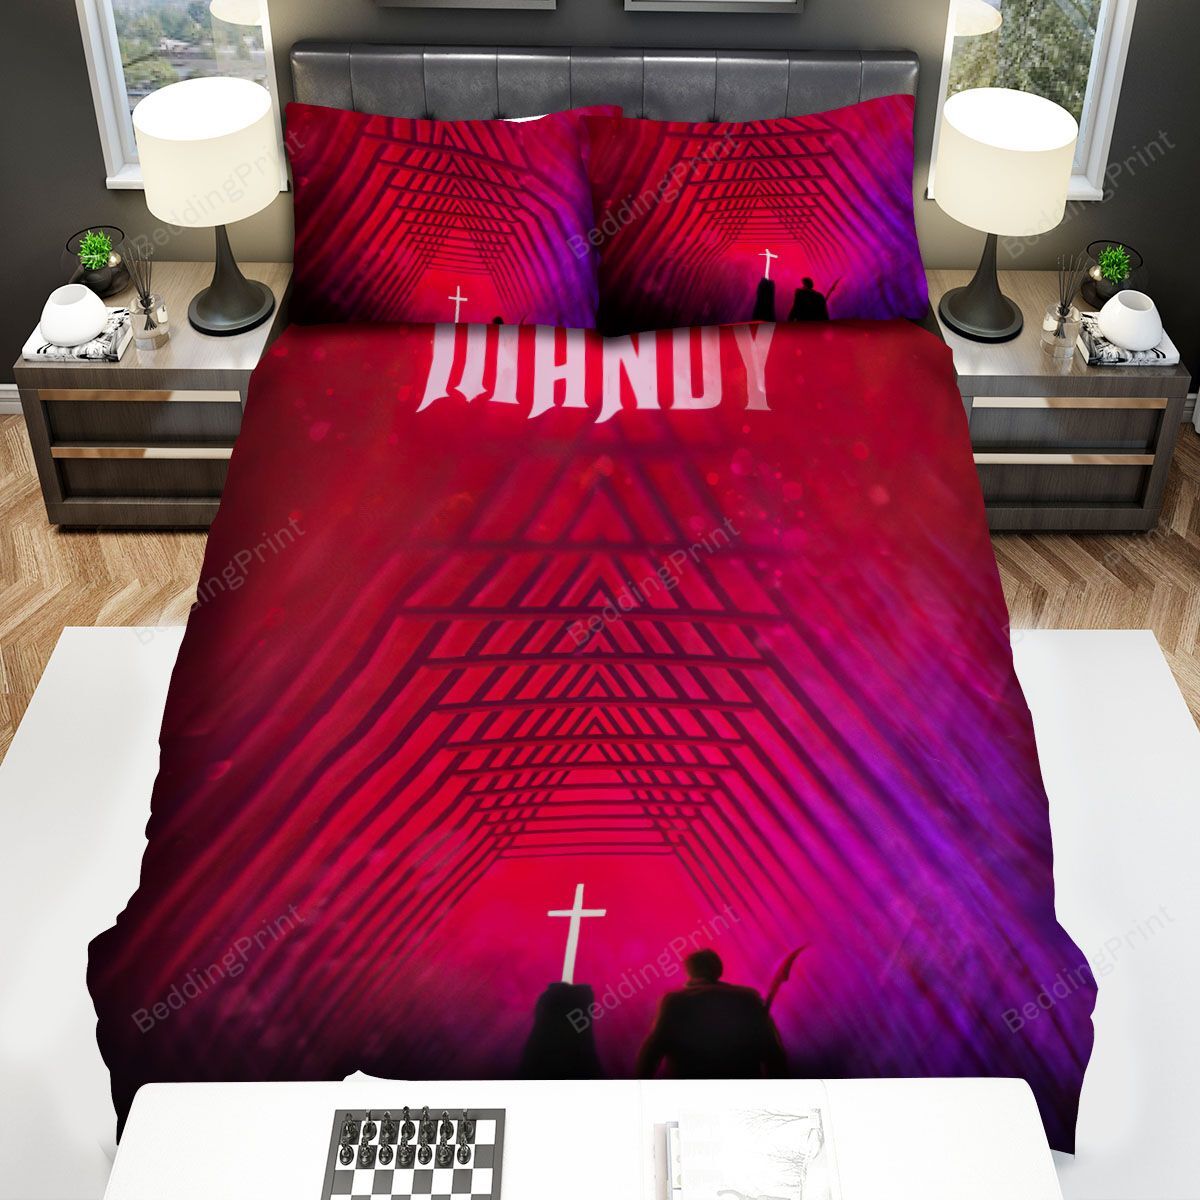 Mandy (I) Movie Poster Bed Sheets Spread Comforter Duvet Cover Bedding Sets Ver 1